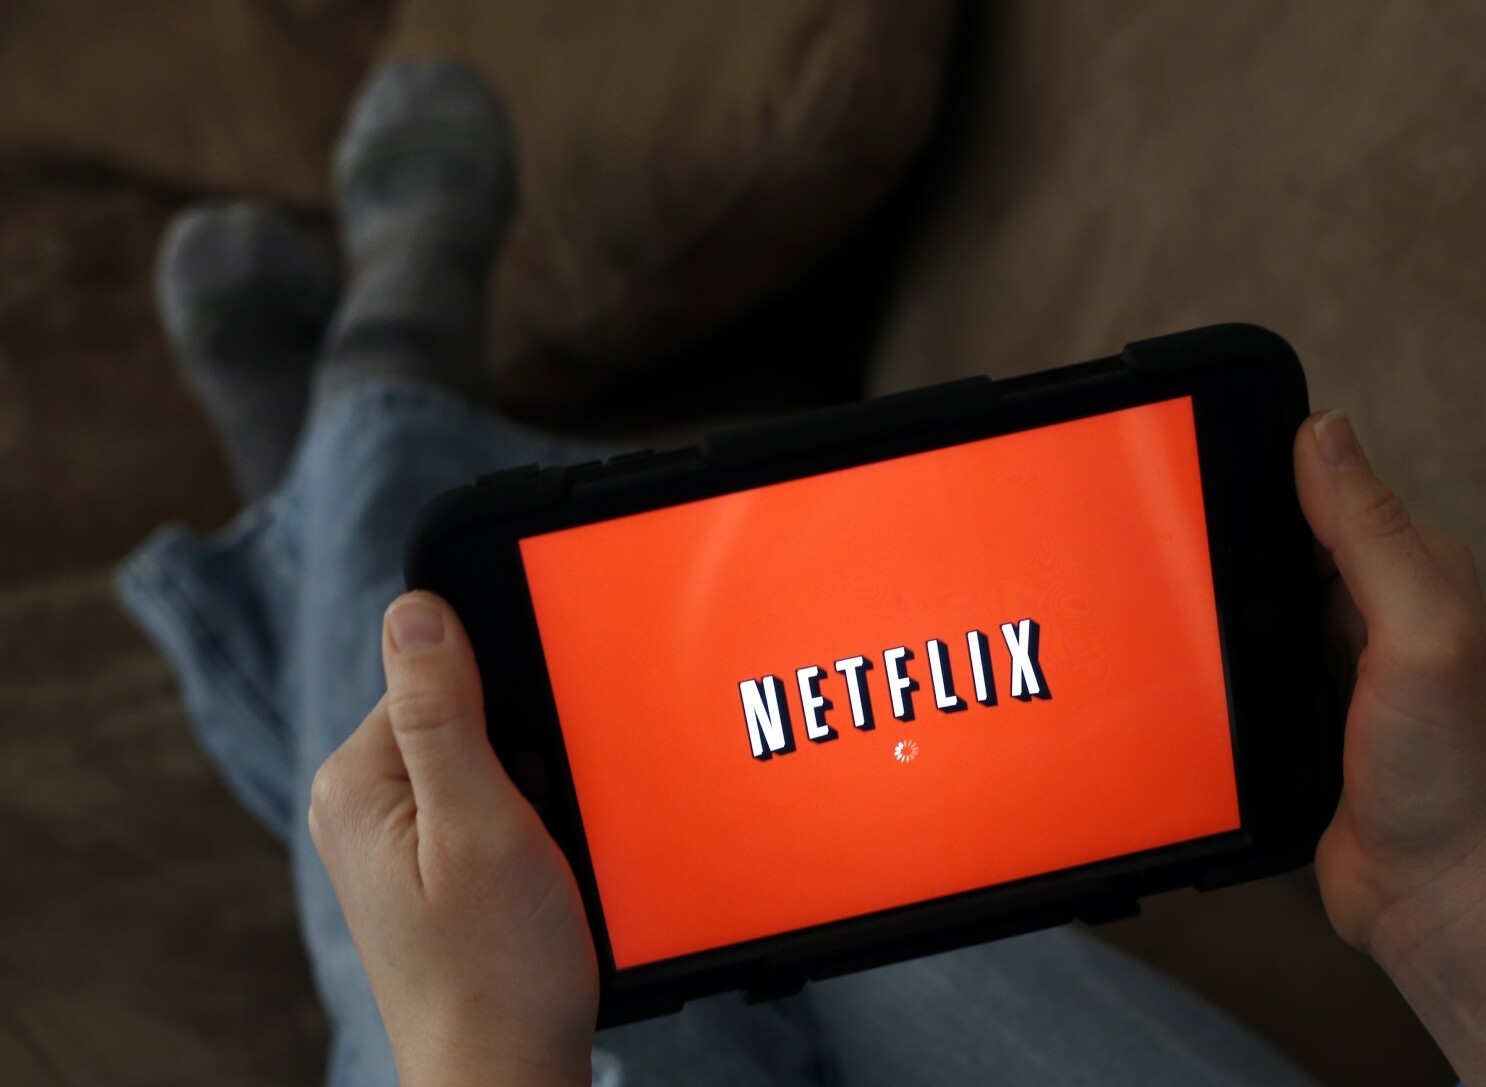 Netflix begins second round of layoffs, 300 positions cut (EXCLUSIVE)